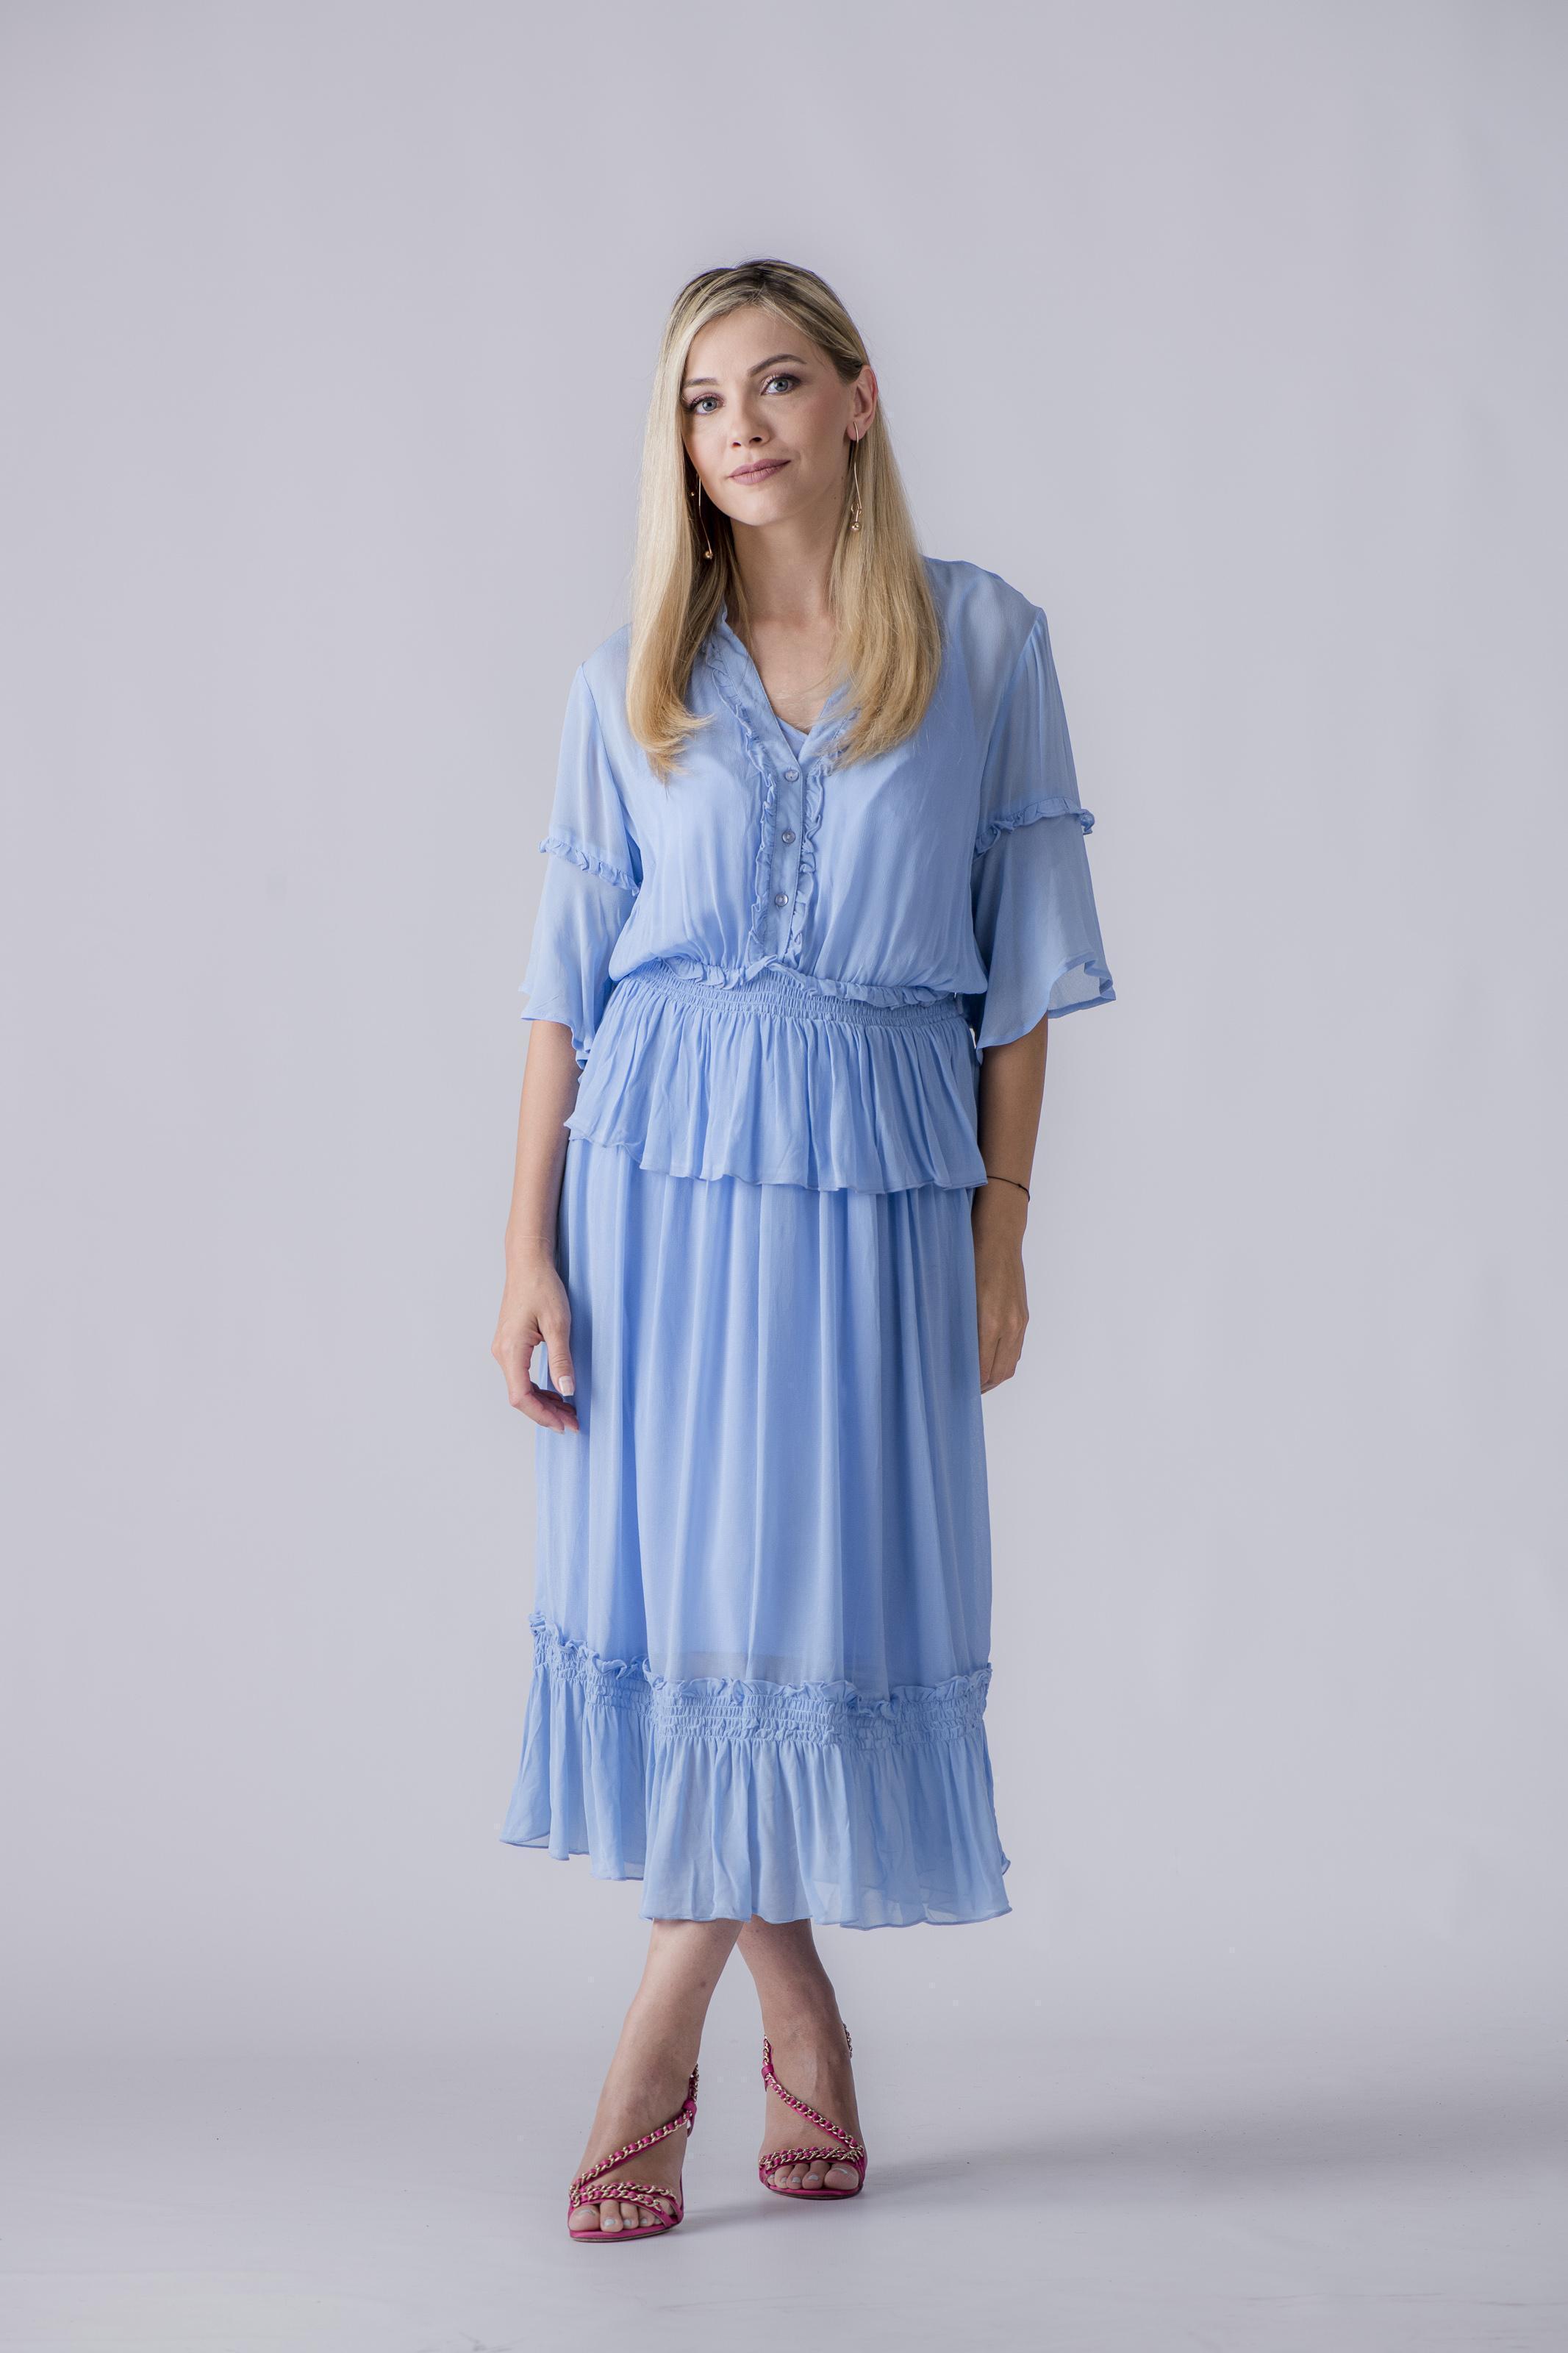 andreea-ibacka-rochie-albastră